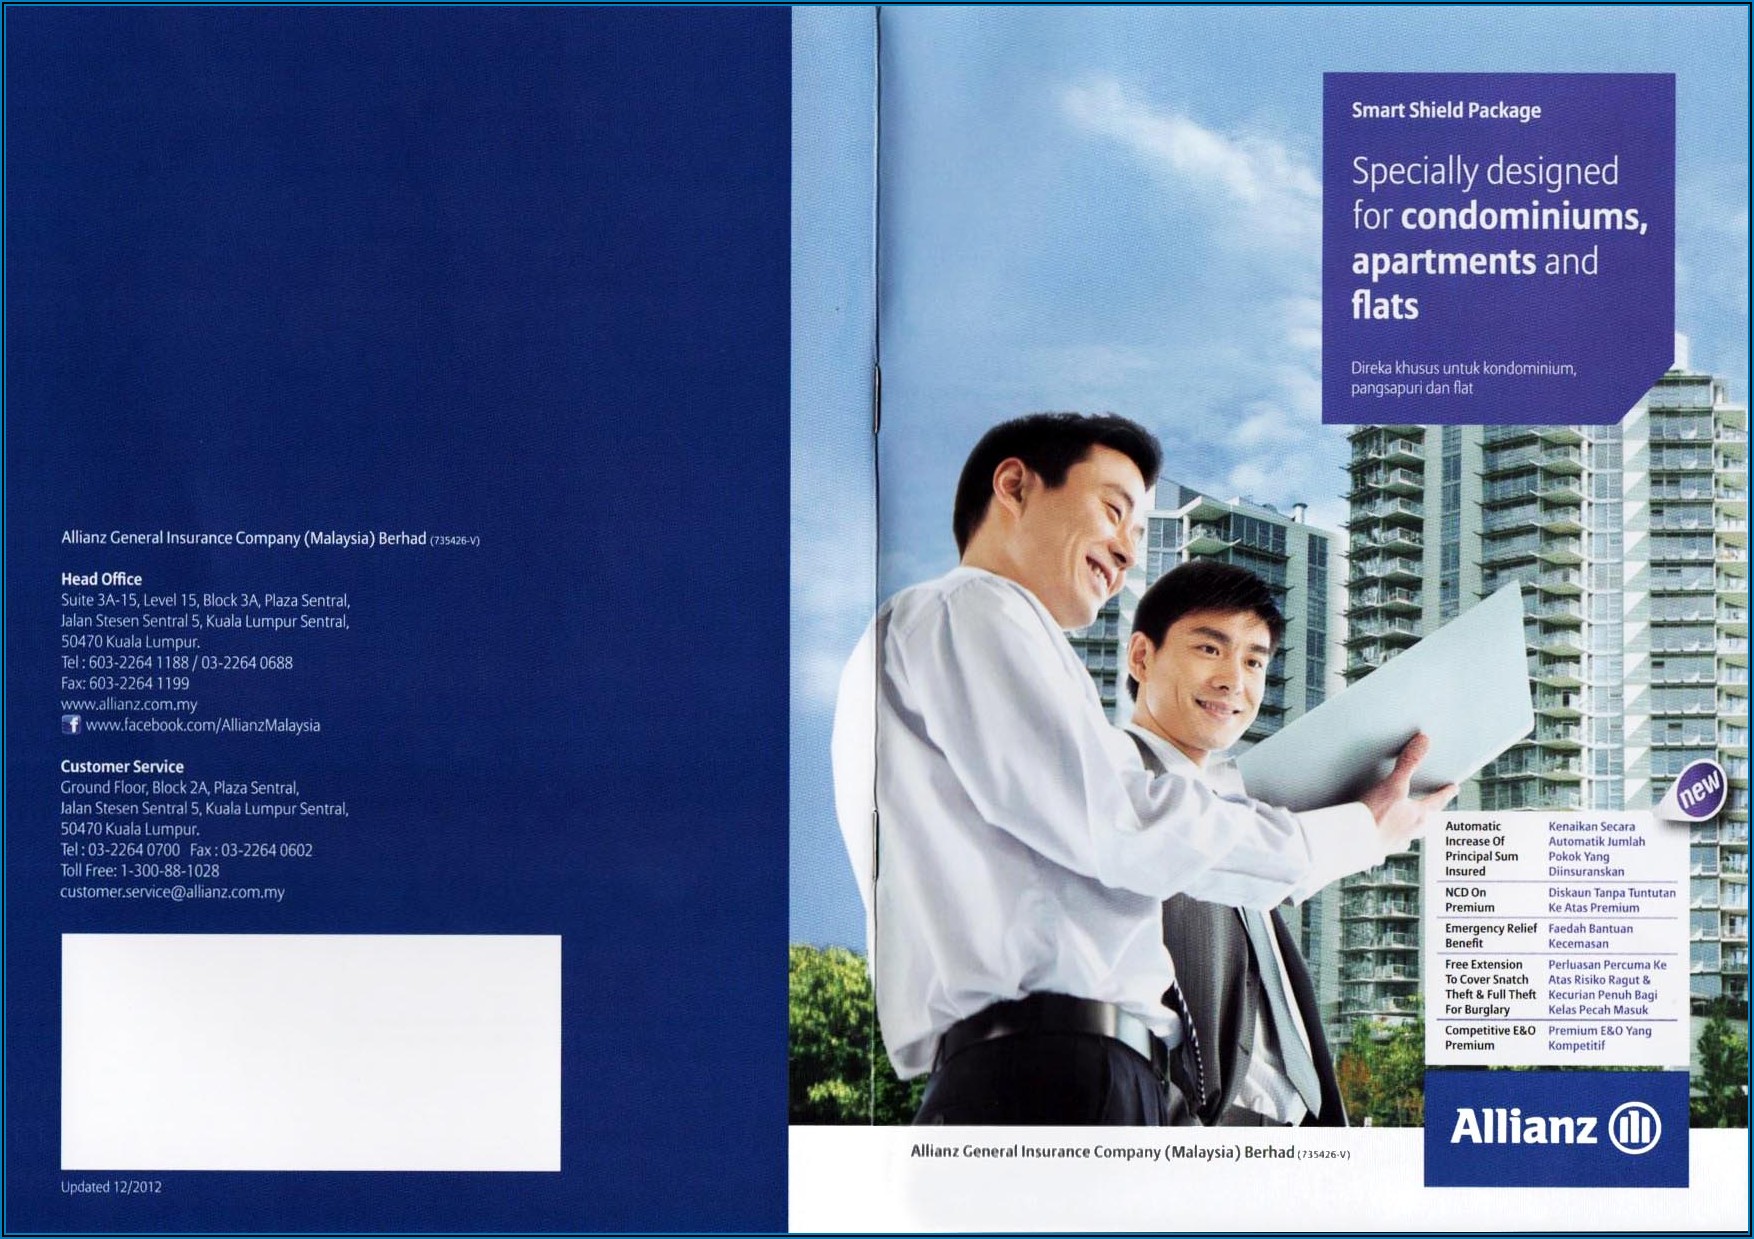 Allianz Travel Insurance Brochure Pdf